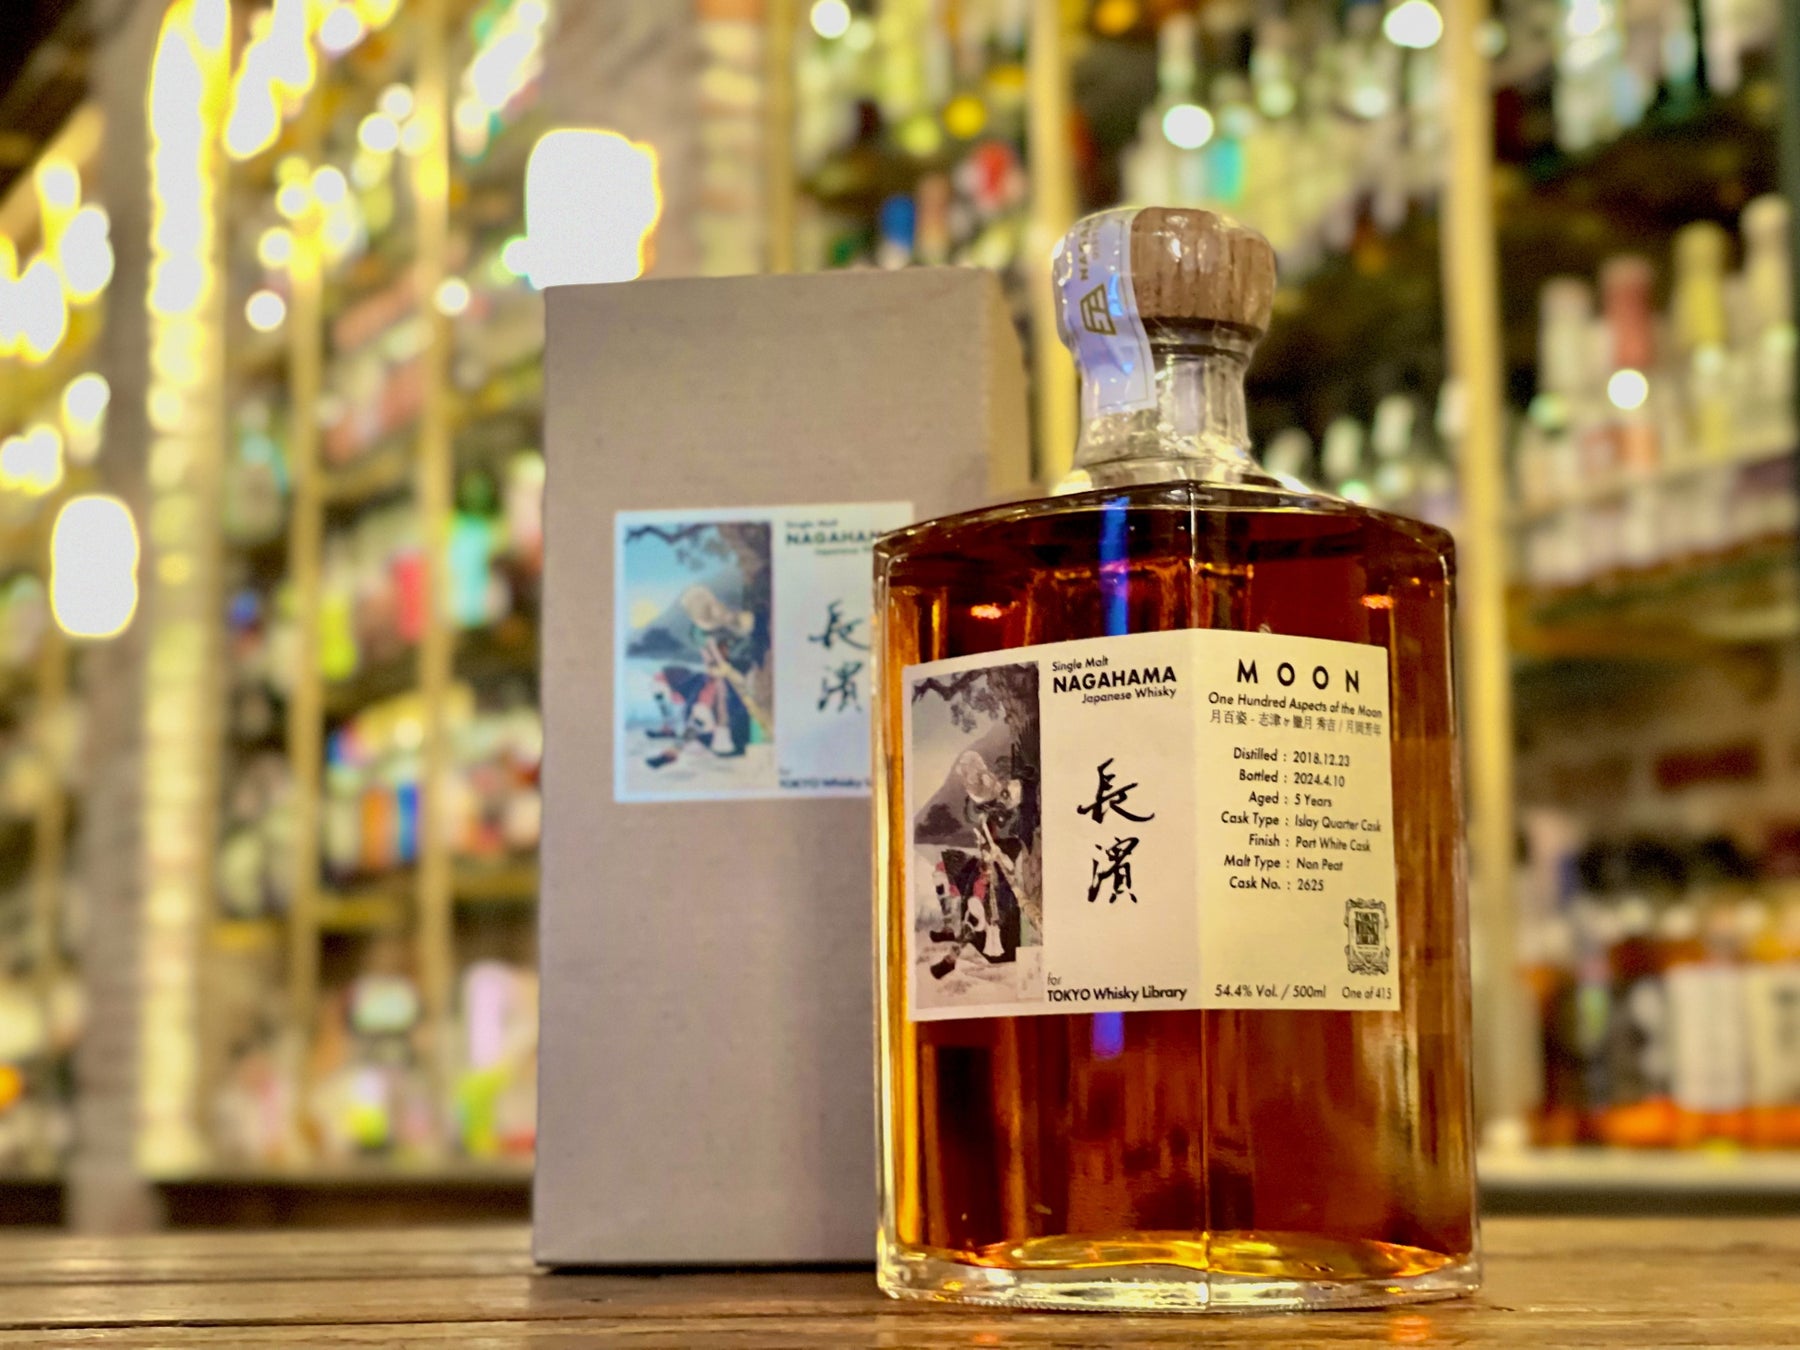 【TOKYO Whisky Library】長濱蒸溜所のシングルカスク・プライベートボトル 「シングルモルト長濱 5年 for TOKYO Whisky Library」発売